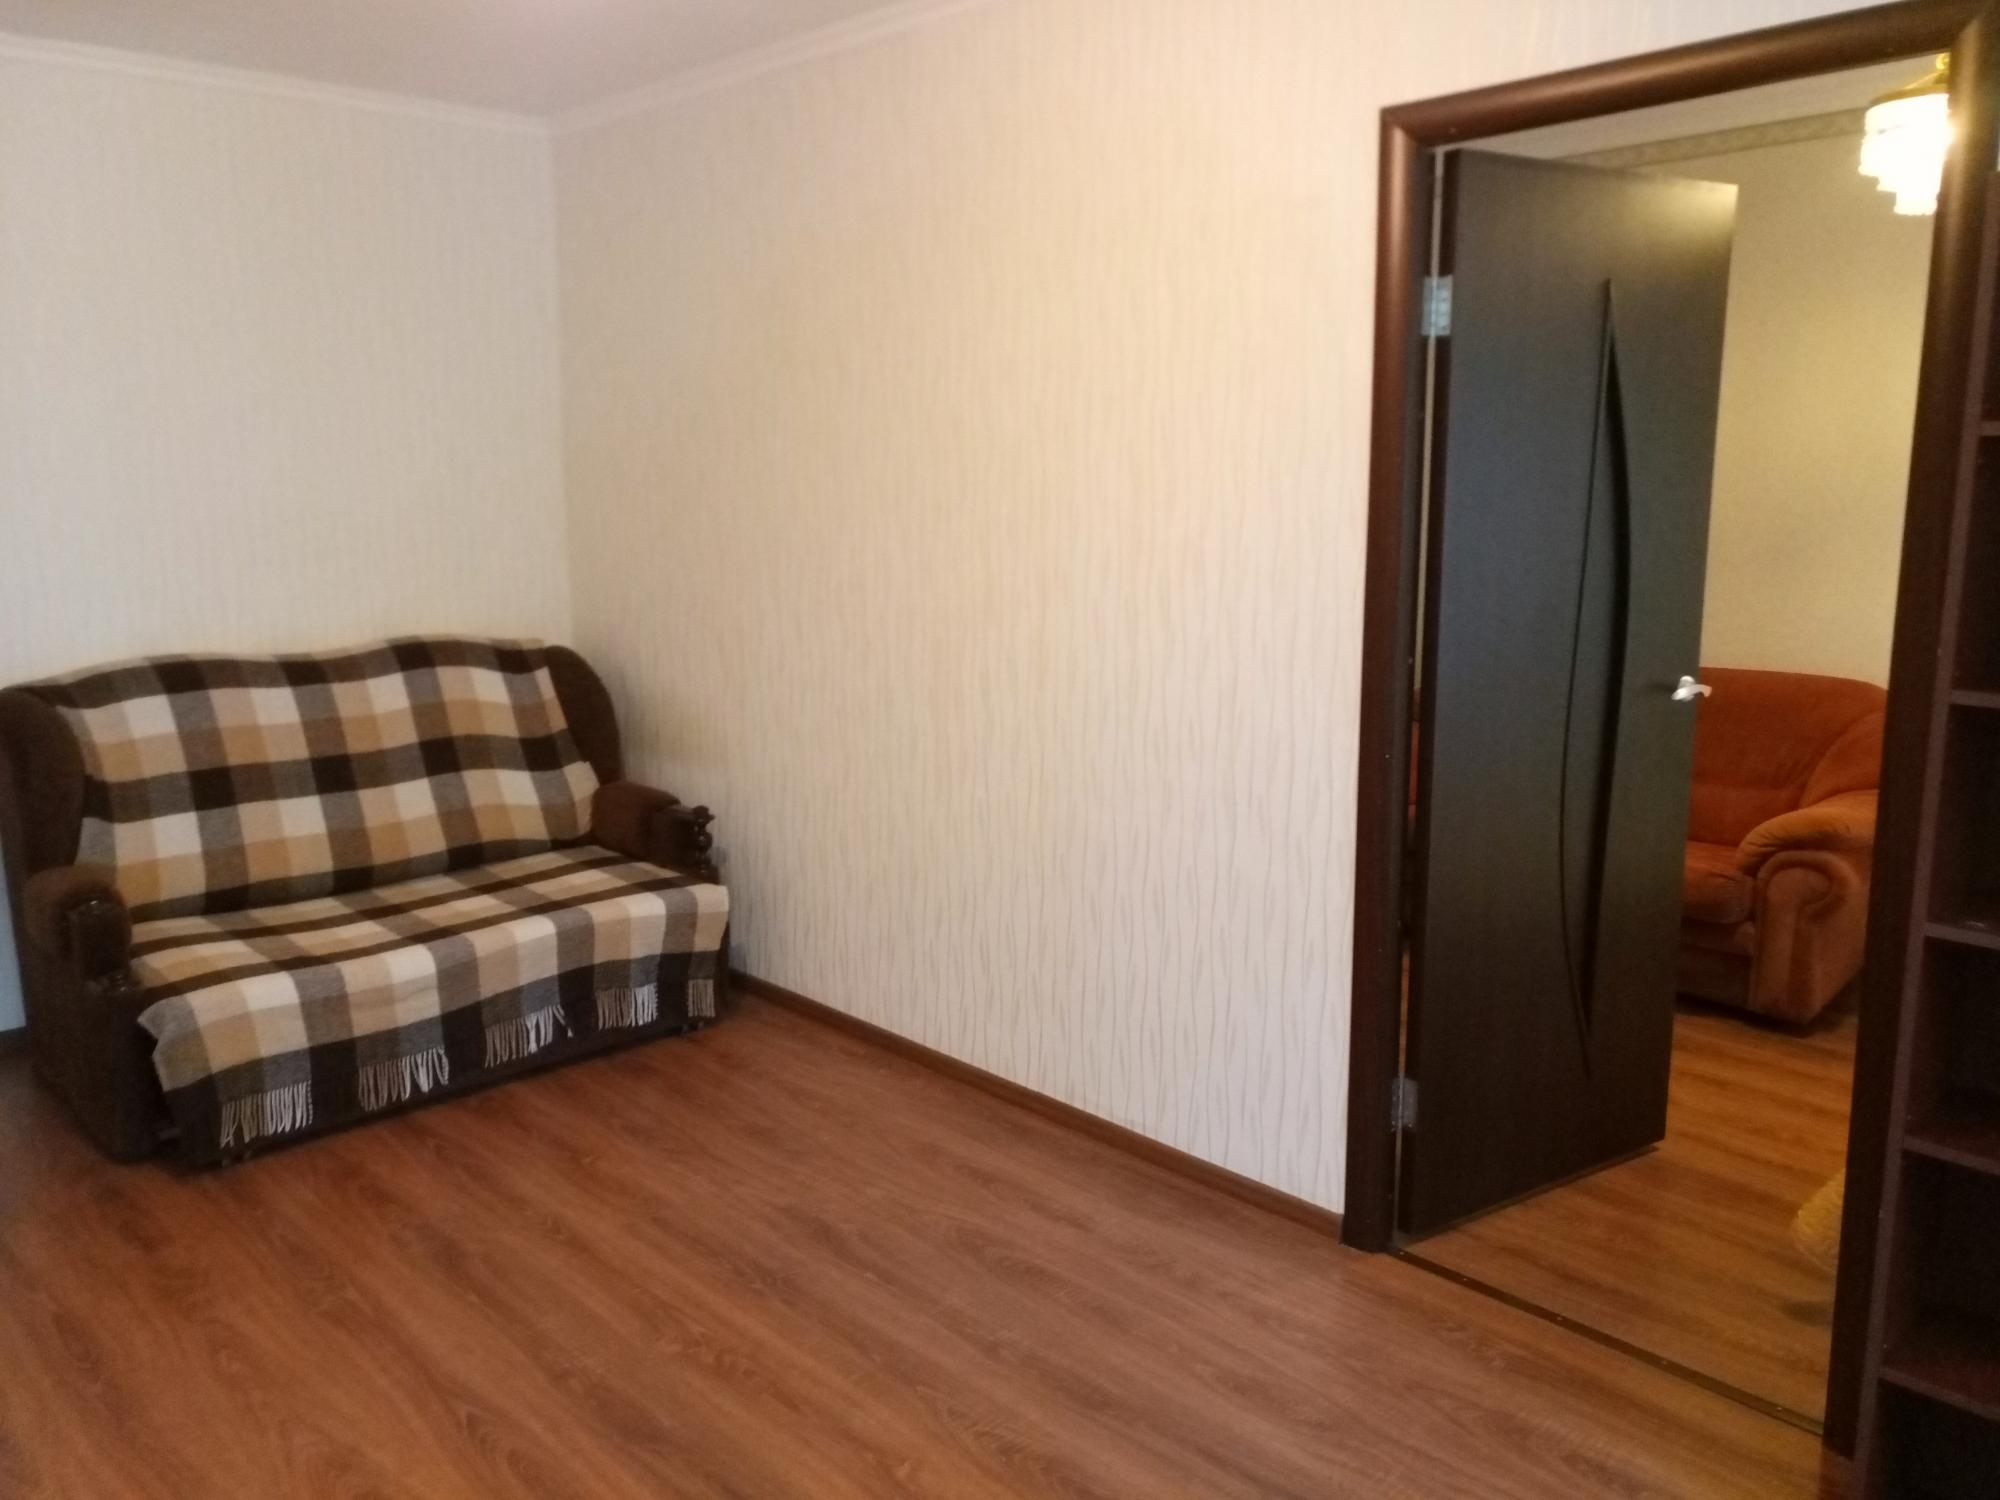 Сниму квартиру рядом метро без посредников. Сниму 2 комнатную квартиру в Кузьминках от хозяина.